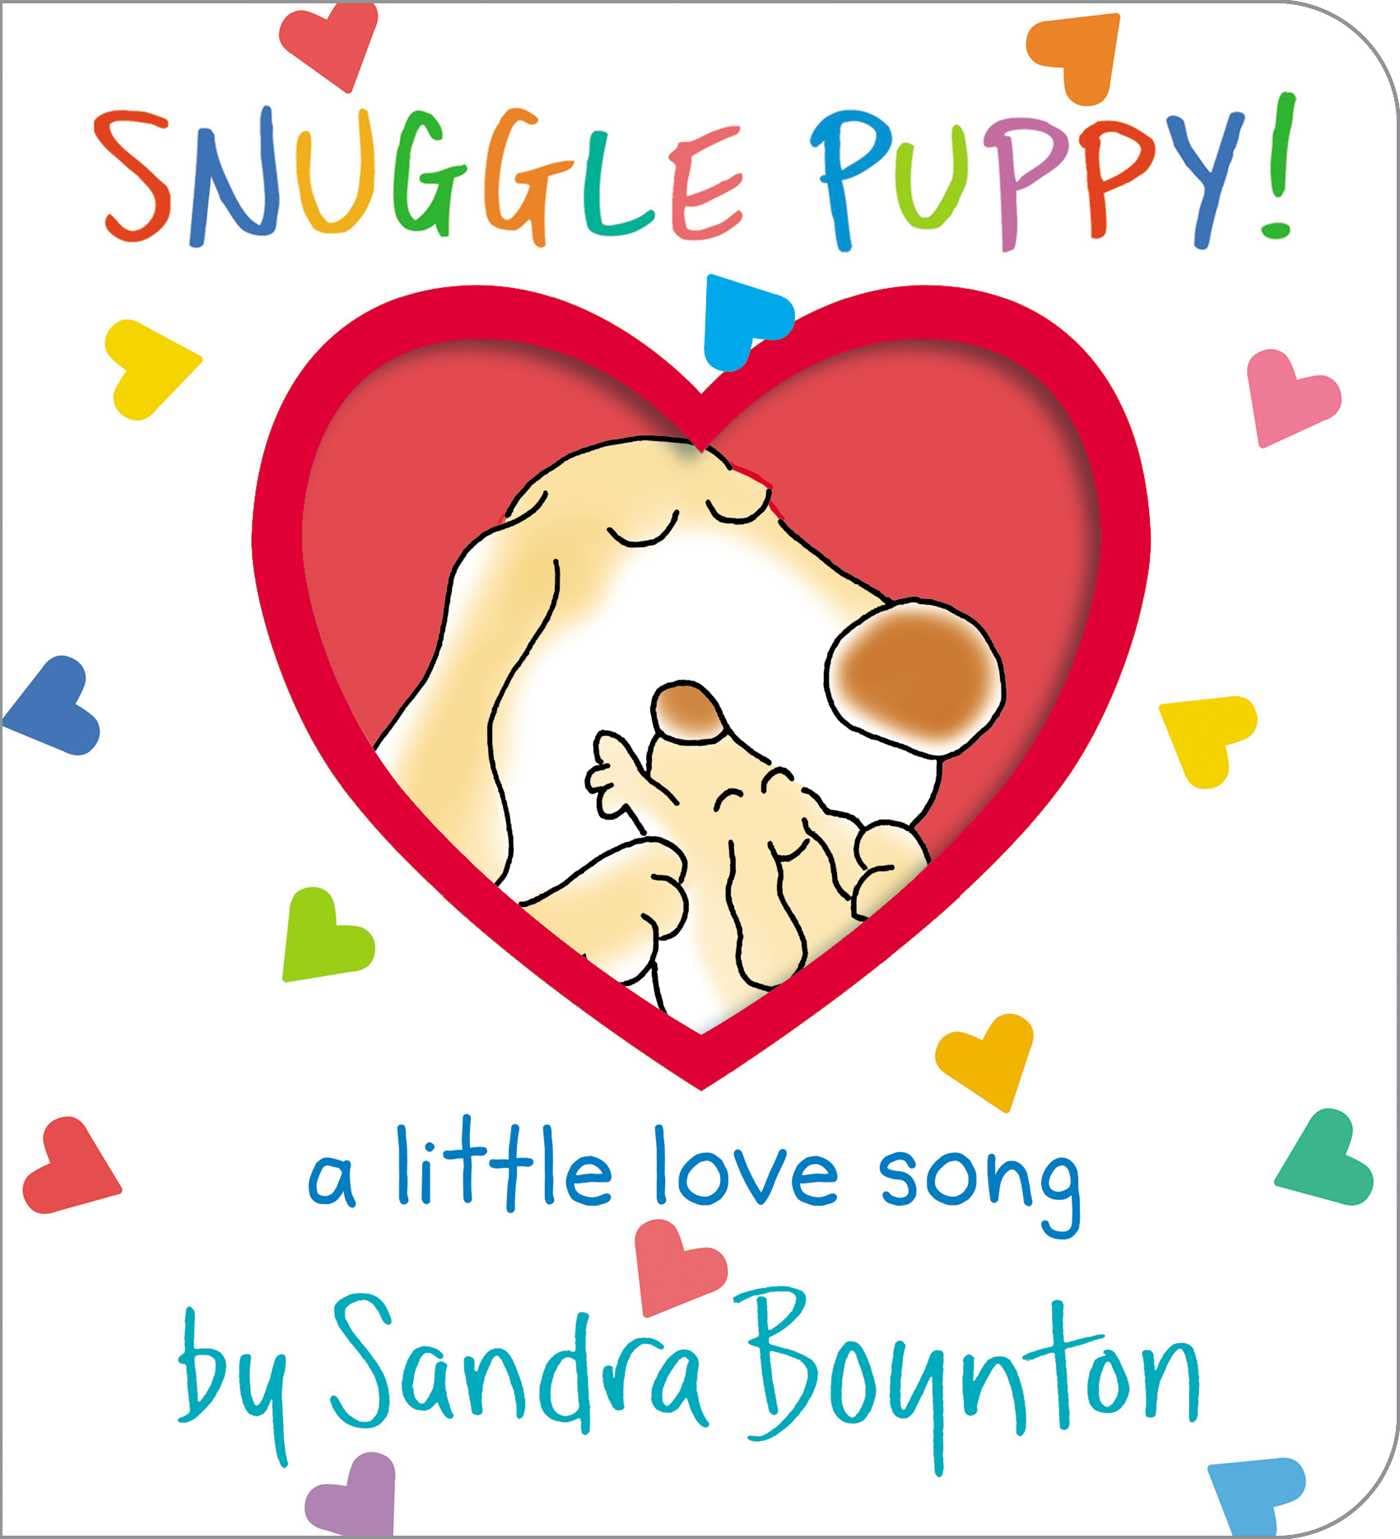 "Snuggle Puppy!: A Little Love Song" by Sandra Boynton